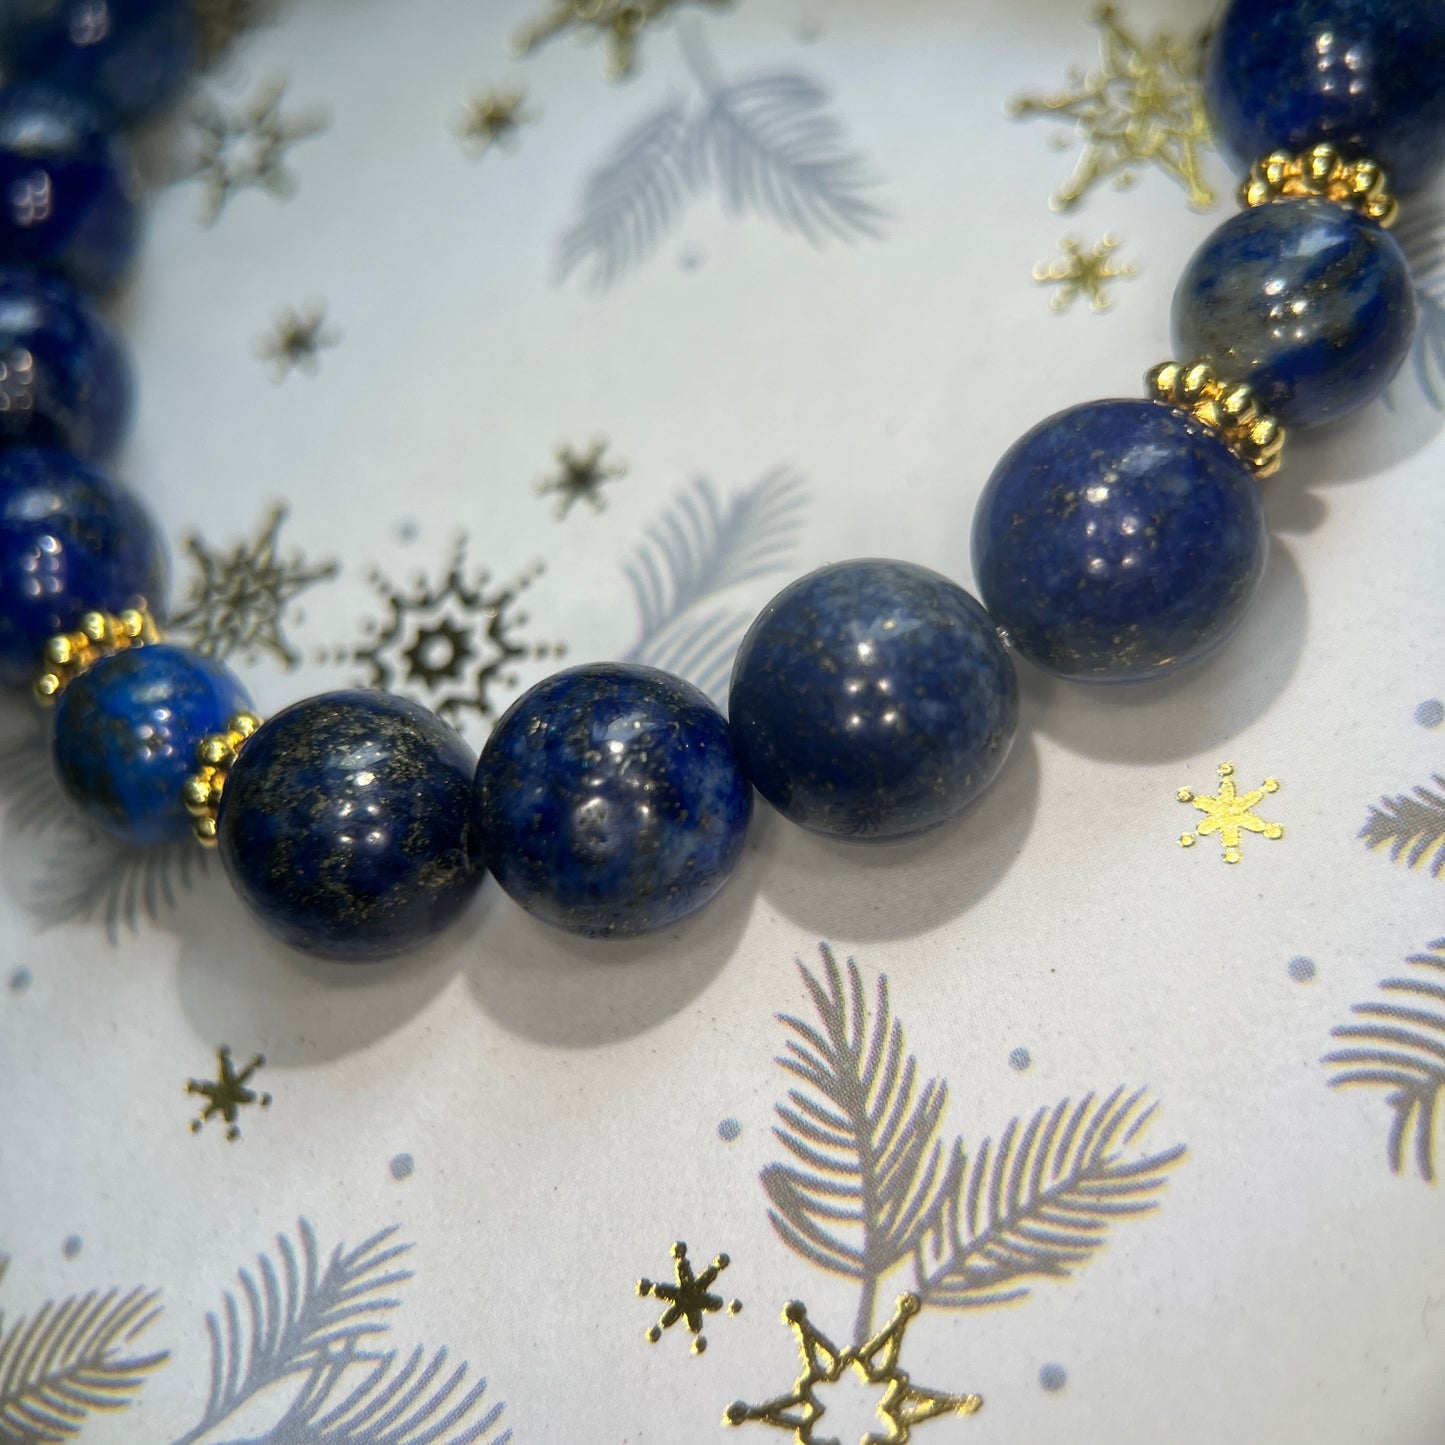 Lapis Lazuli Chakra Bracelet